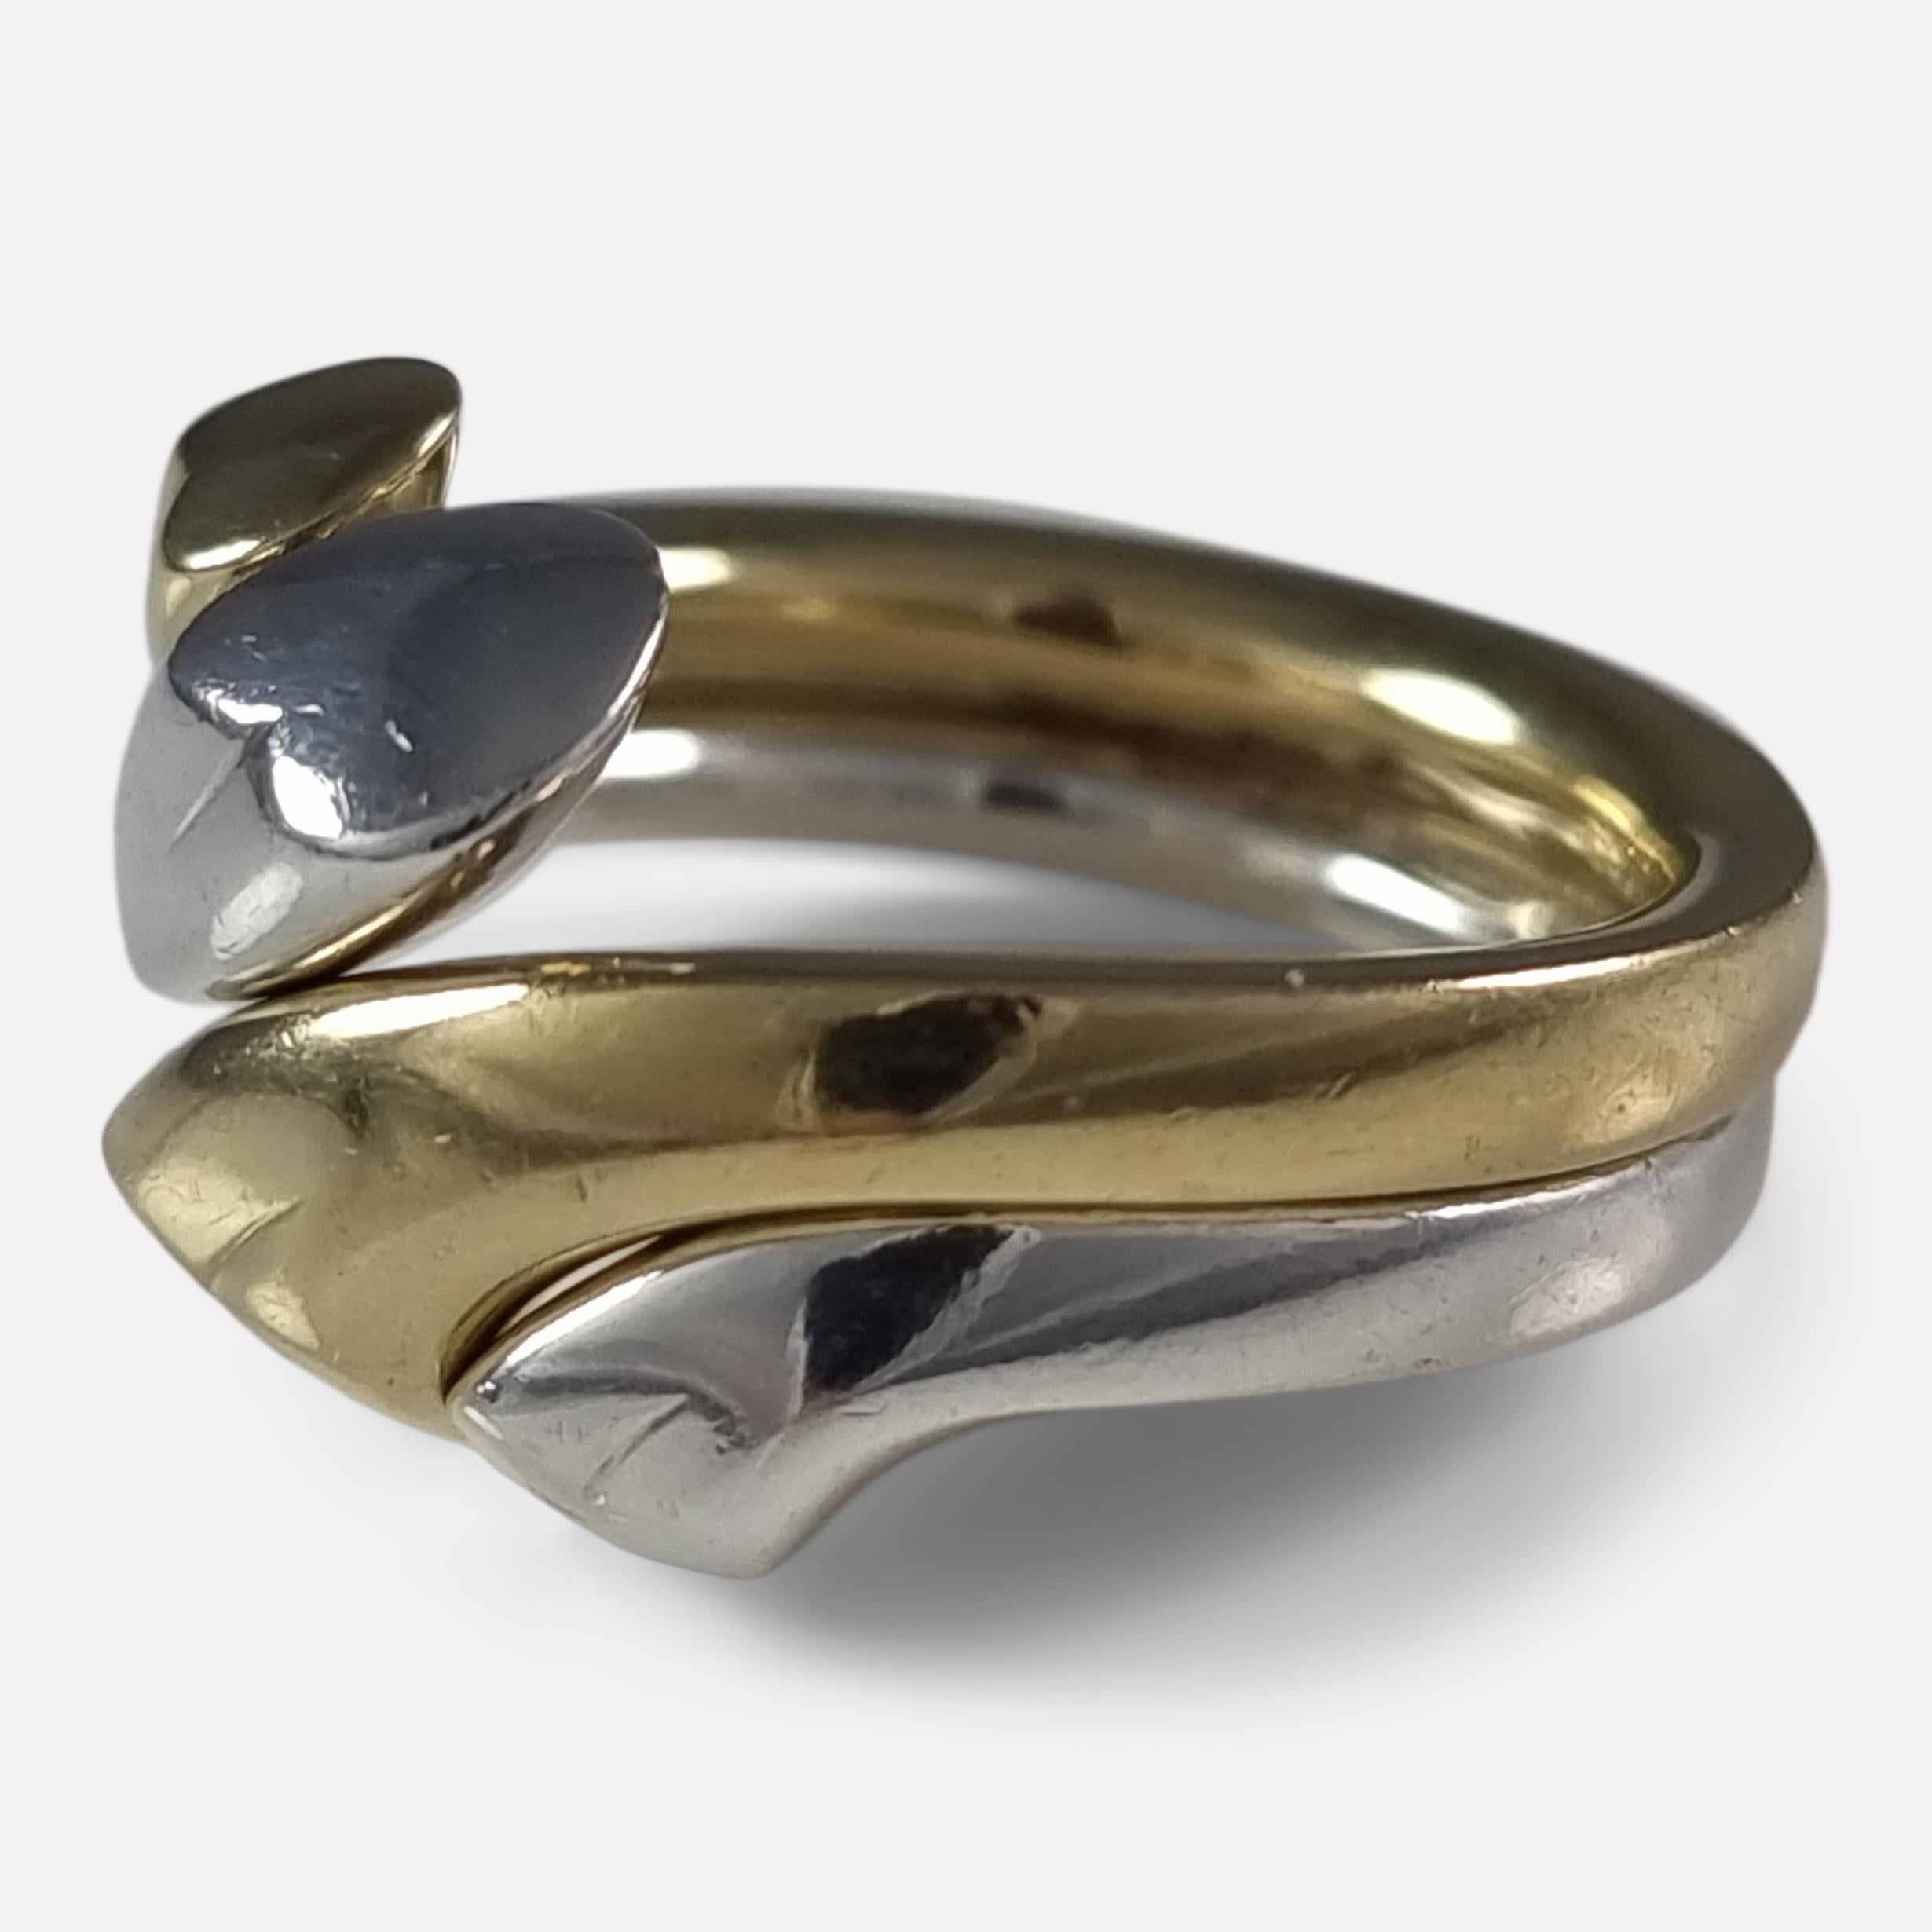 Georg Jensen 18ct Gold and Silver 'Devoted Heart' Ring, Regitze Overgaard 11